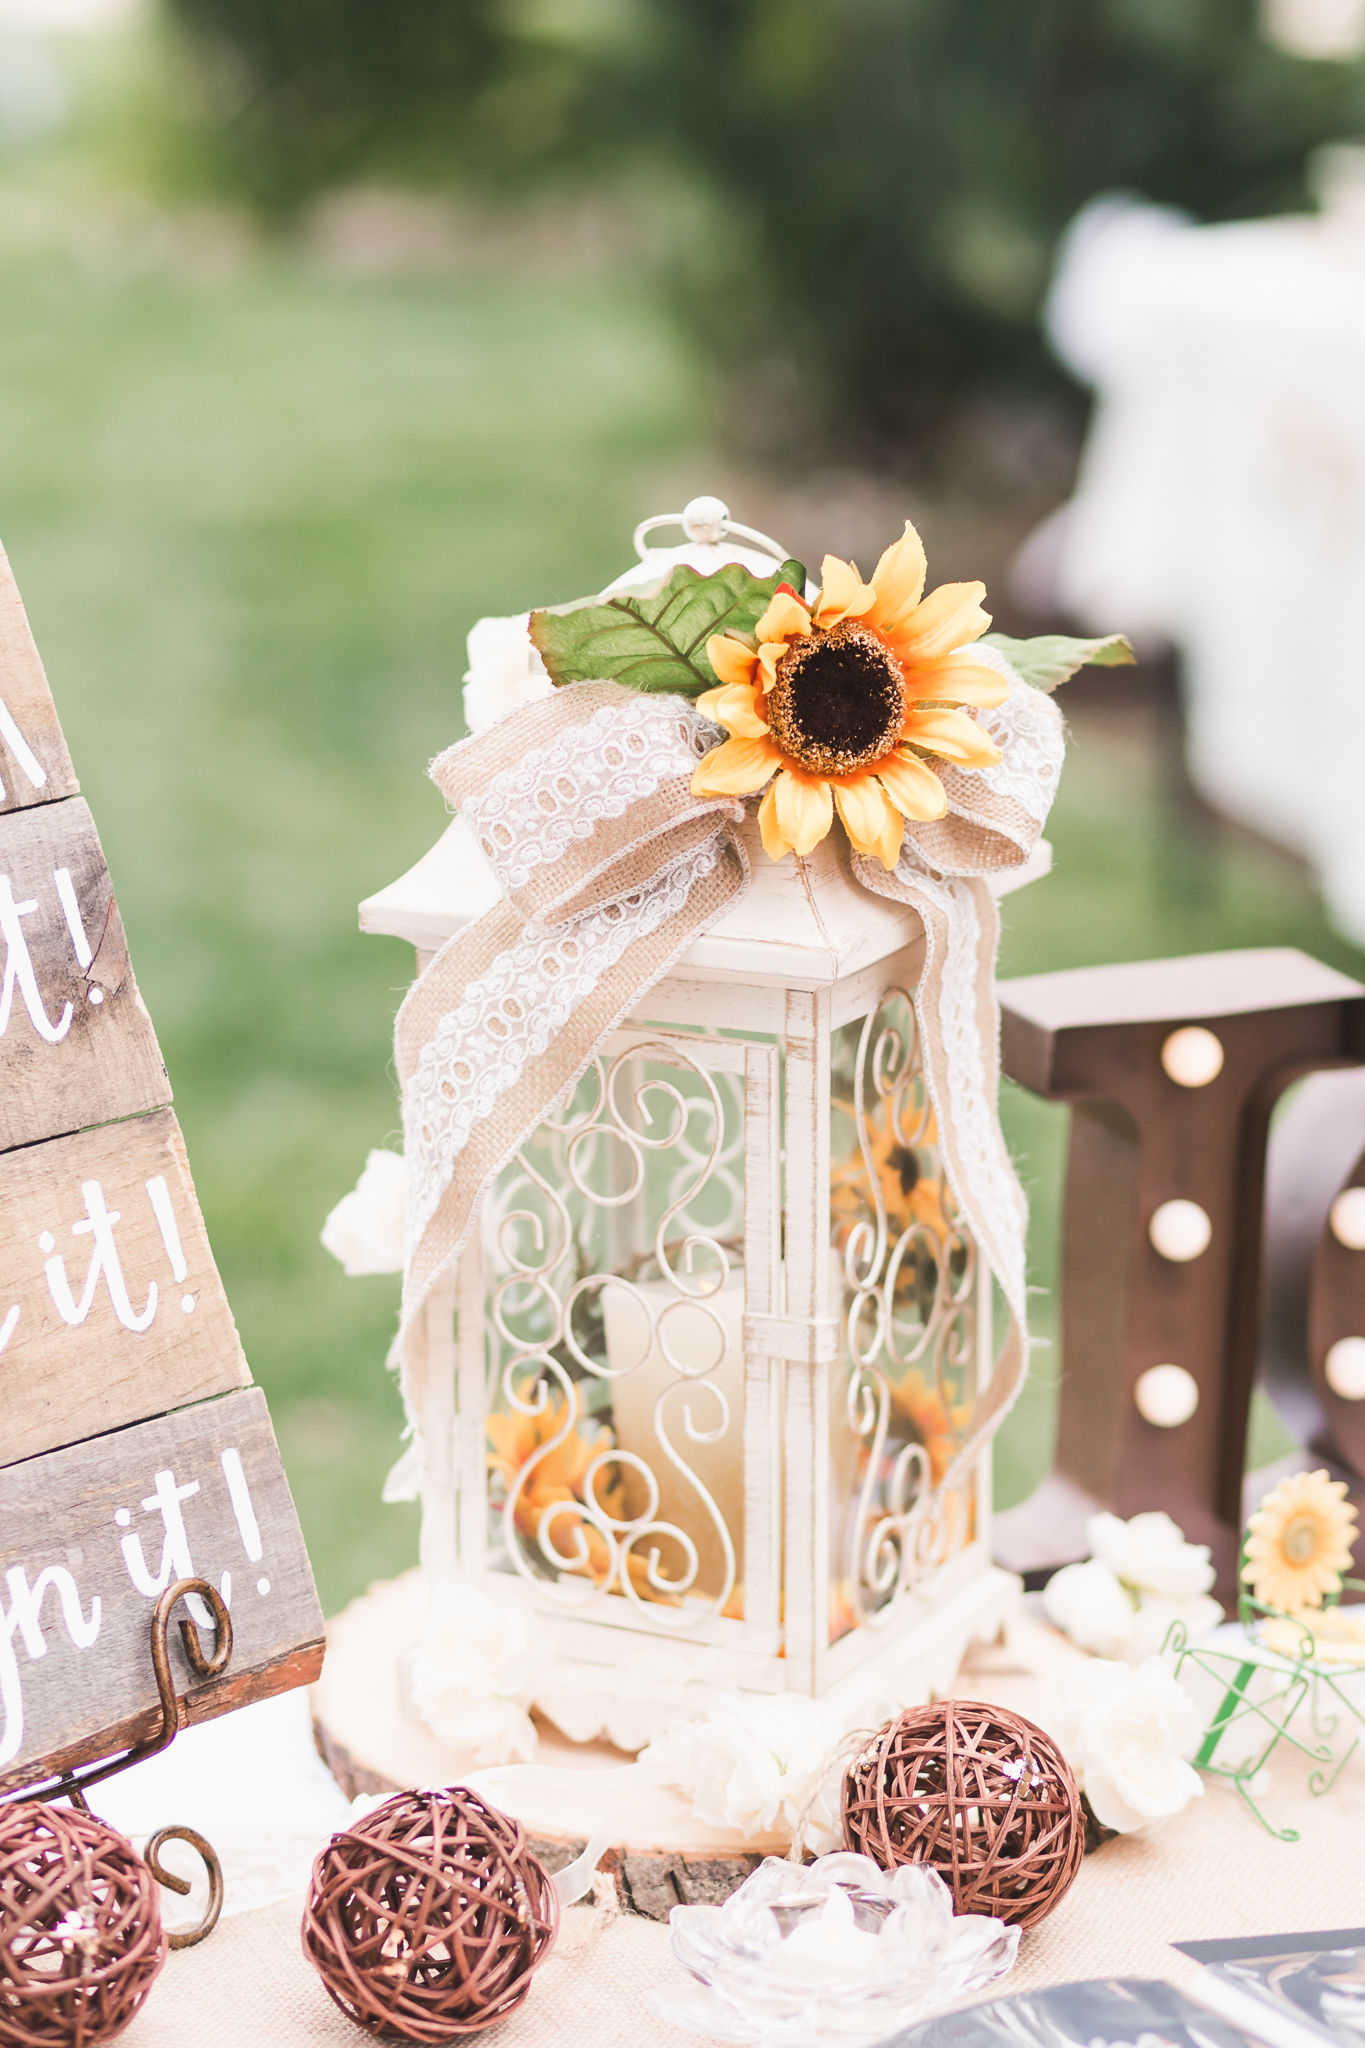 A Rustic DIY Wisconsin Wedding - Heritage Hill State Historical Park Wedding - The Overwhelmed Bride Wedding Blog